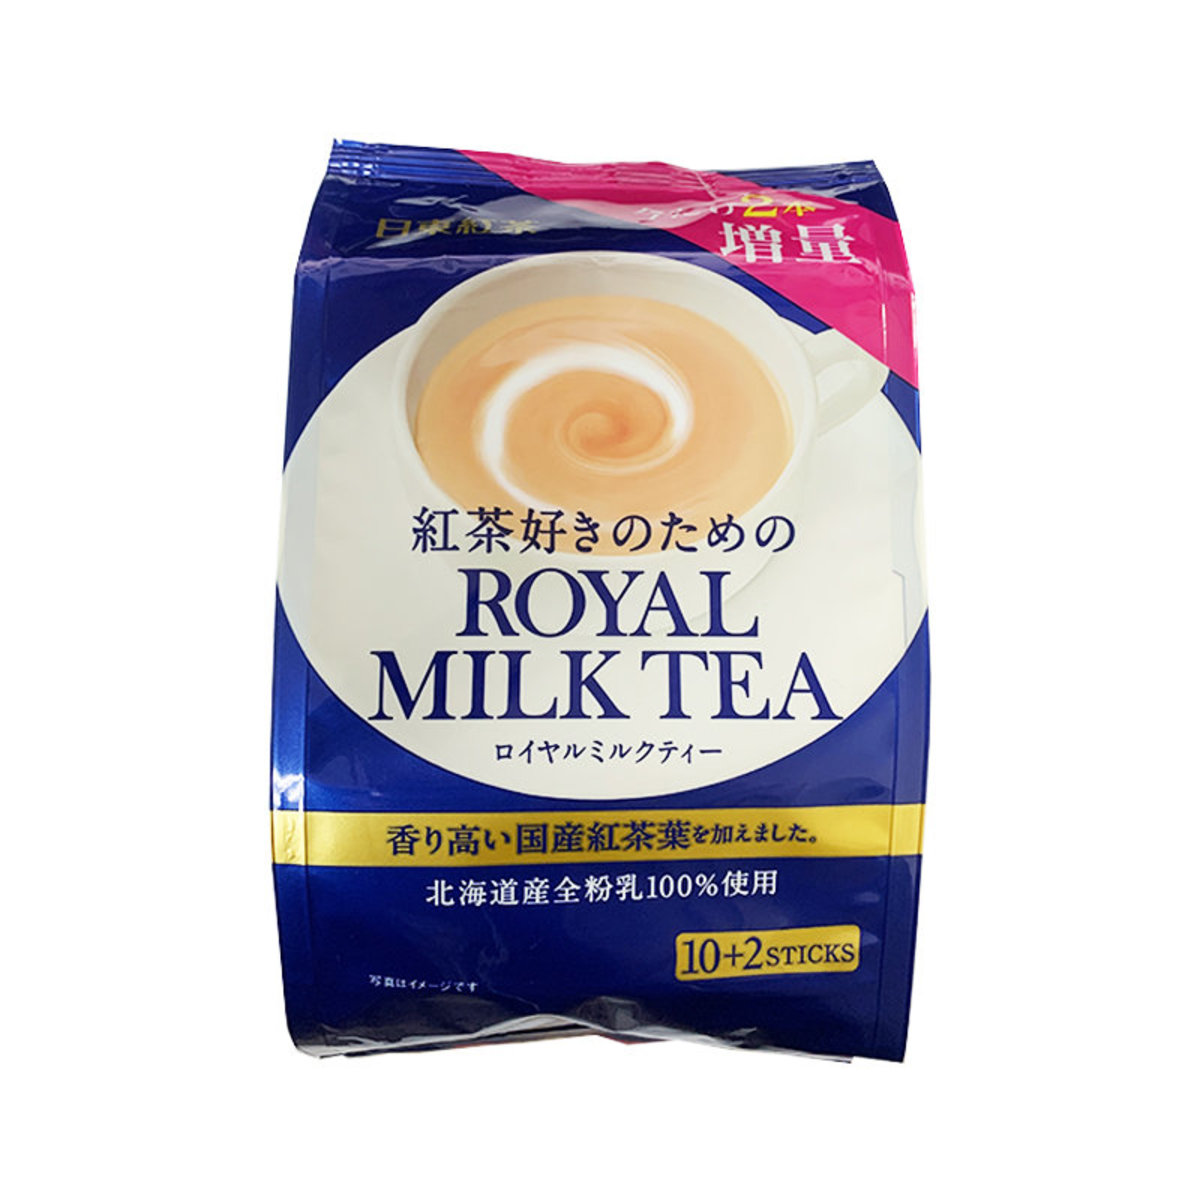 【EXP SALE 12/24】Royal Milk Tea (10+2 sticks)(Parallel Imports Product)